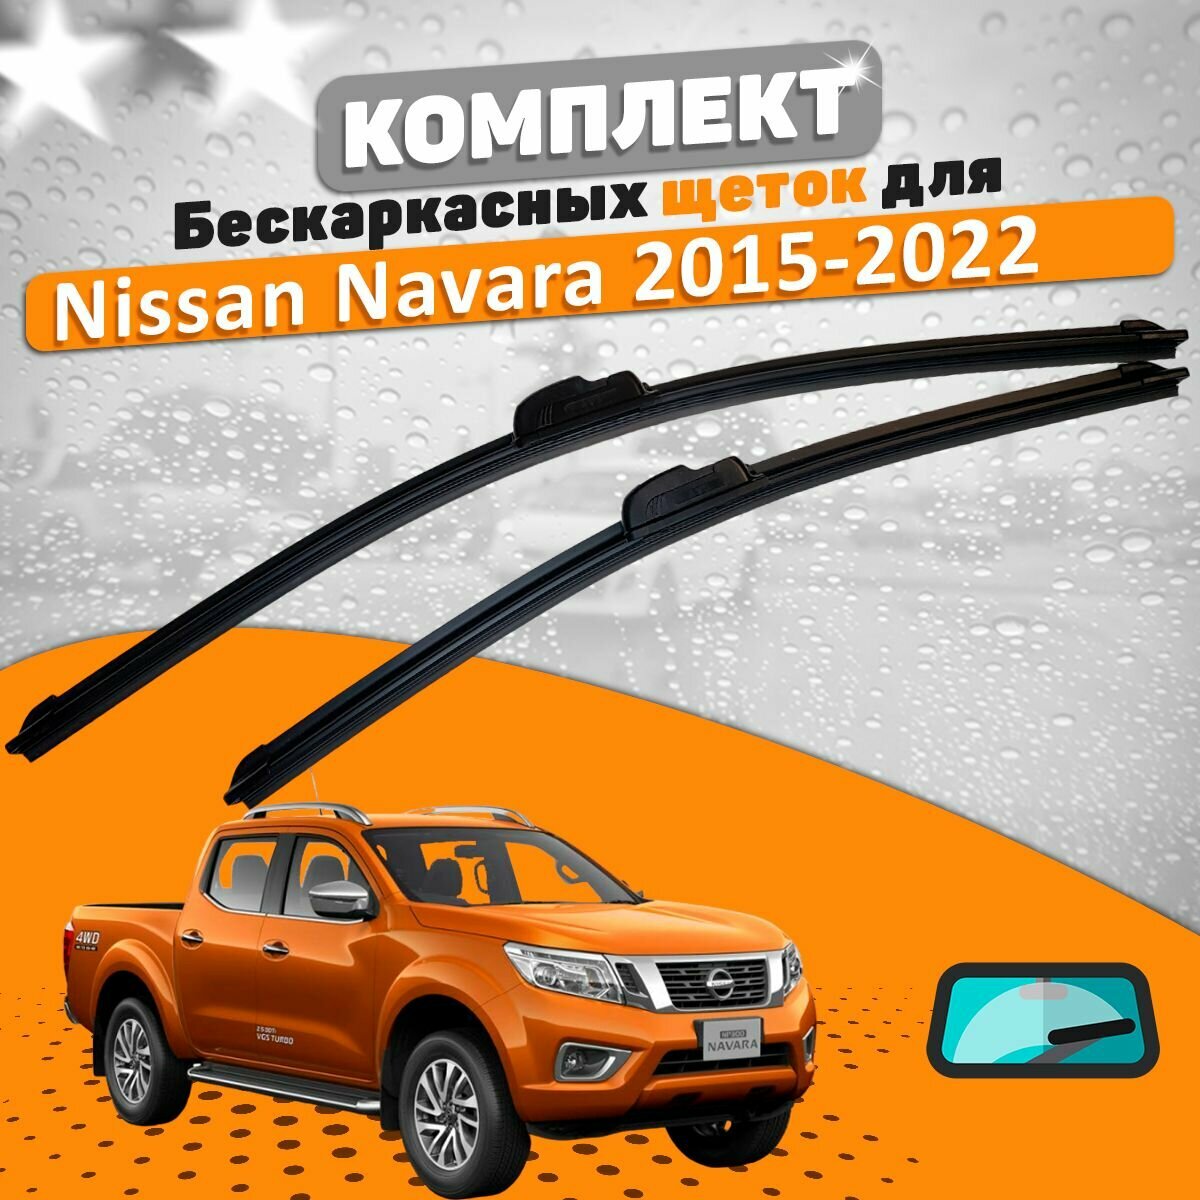 Щетки комплект Nissan Navara 2015-2022 (600 и 400 мм) / Дворники Ниссан Навара